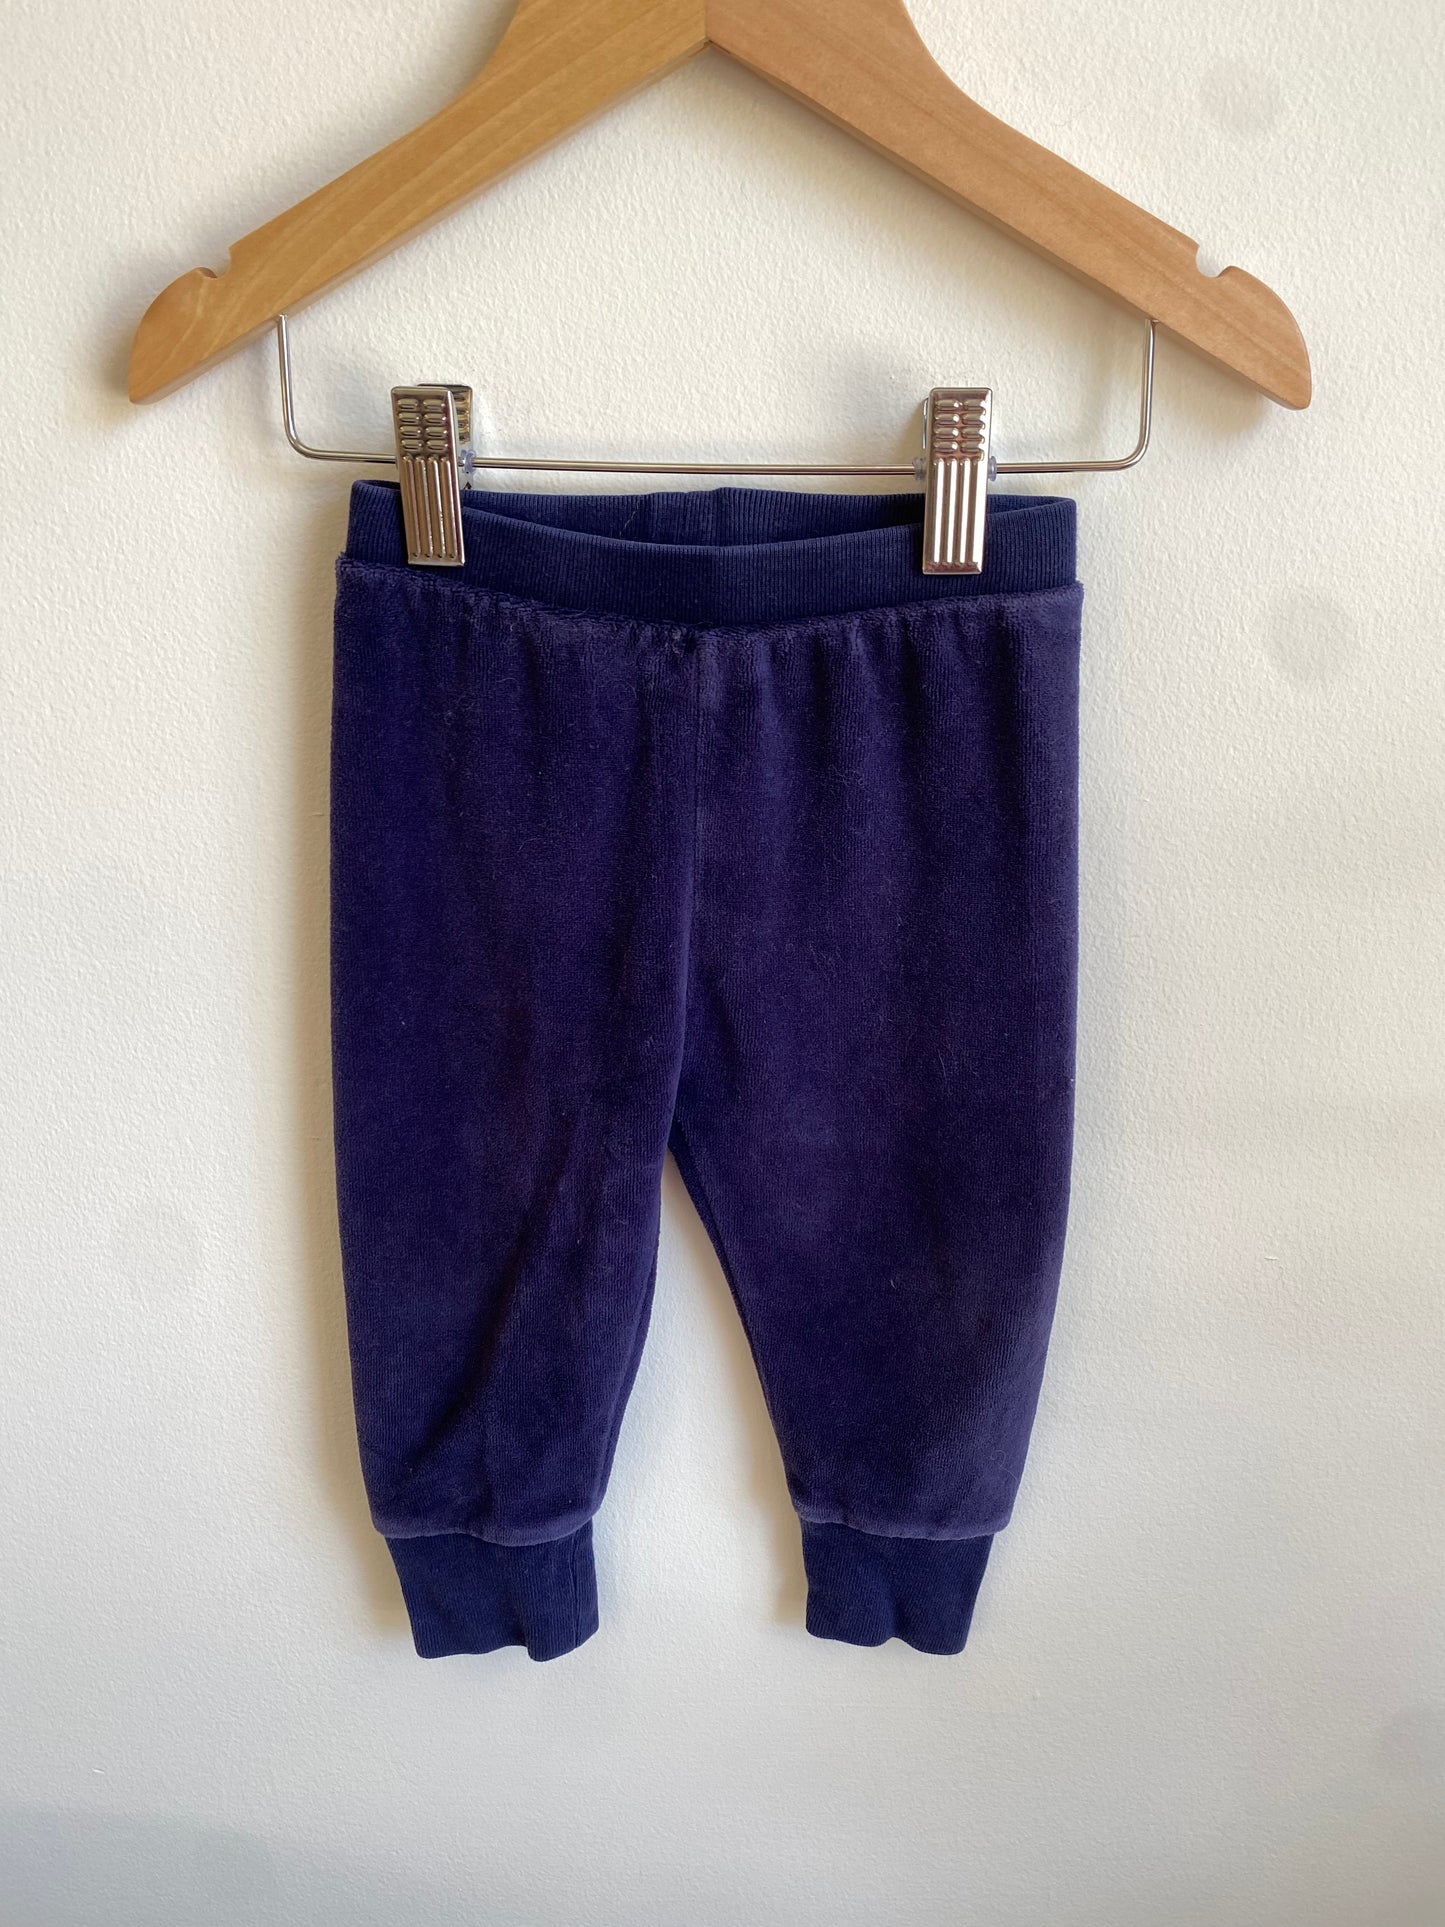 Soft Royal Blue Pants / 18-24m